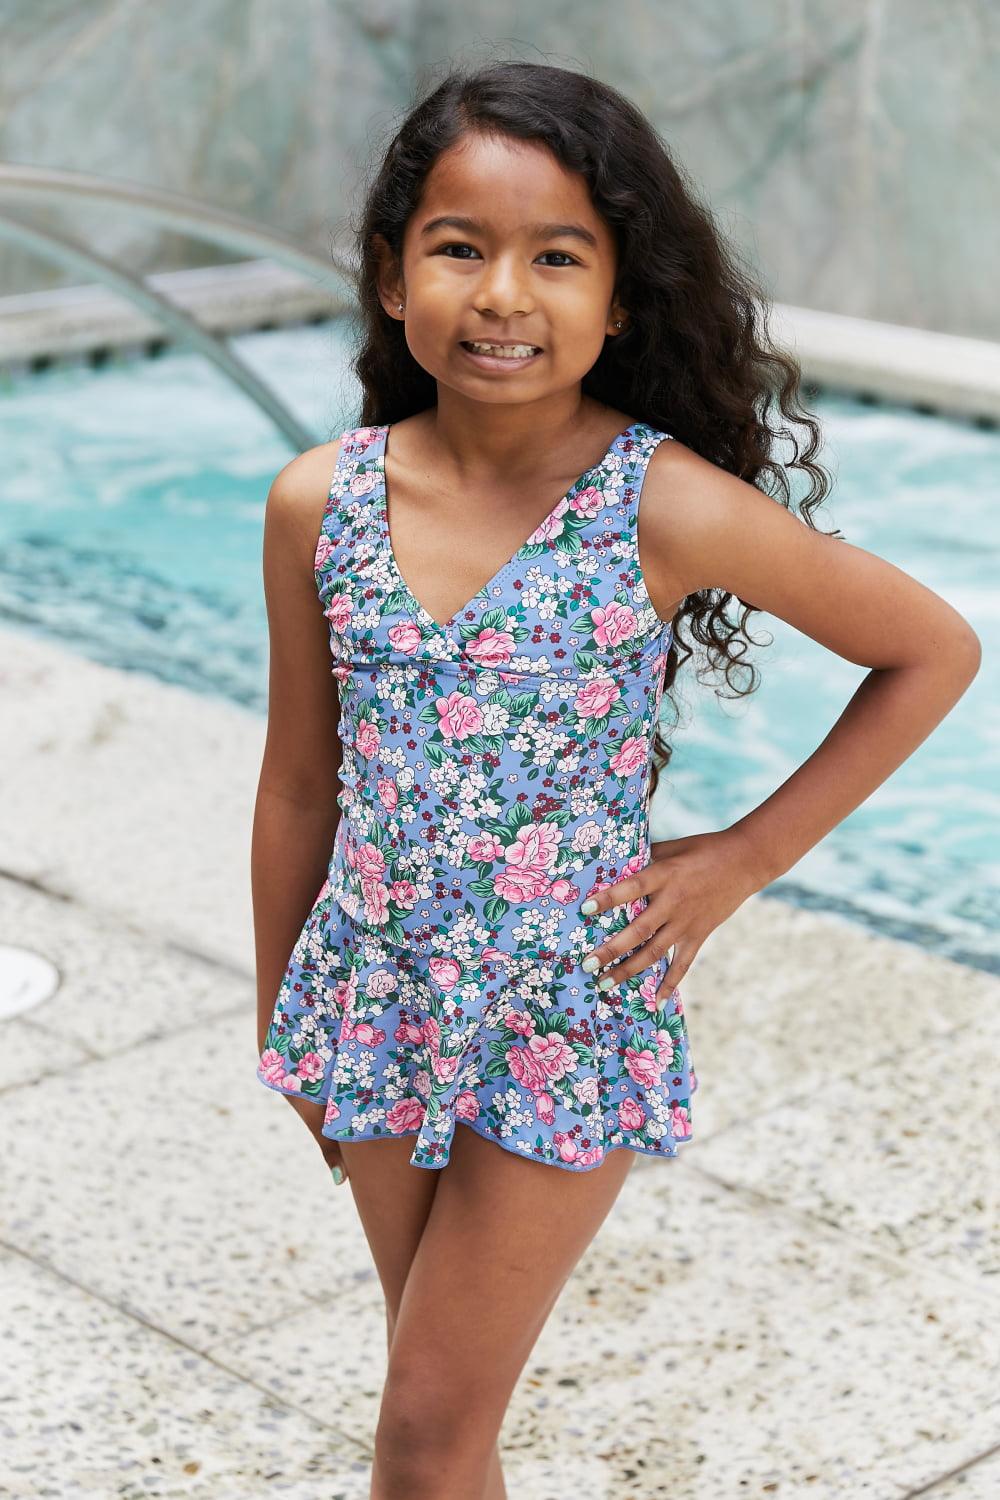 Smiling Beautiful Girl in Dress Posing near Swimming Pool · Free Stock Photo